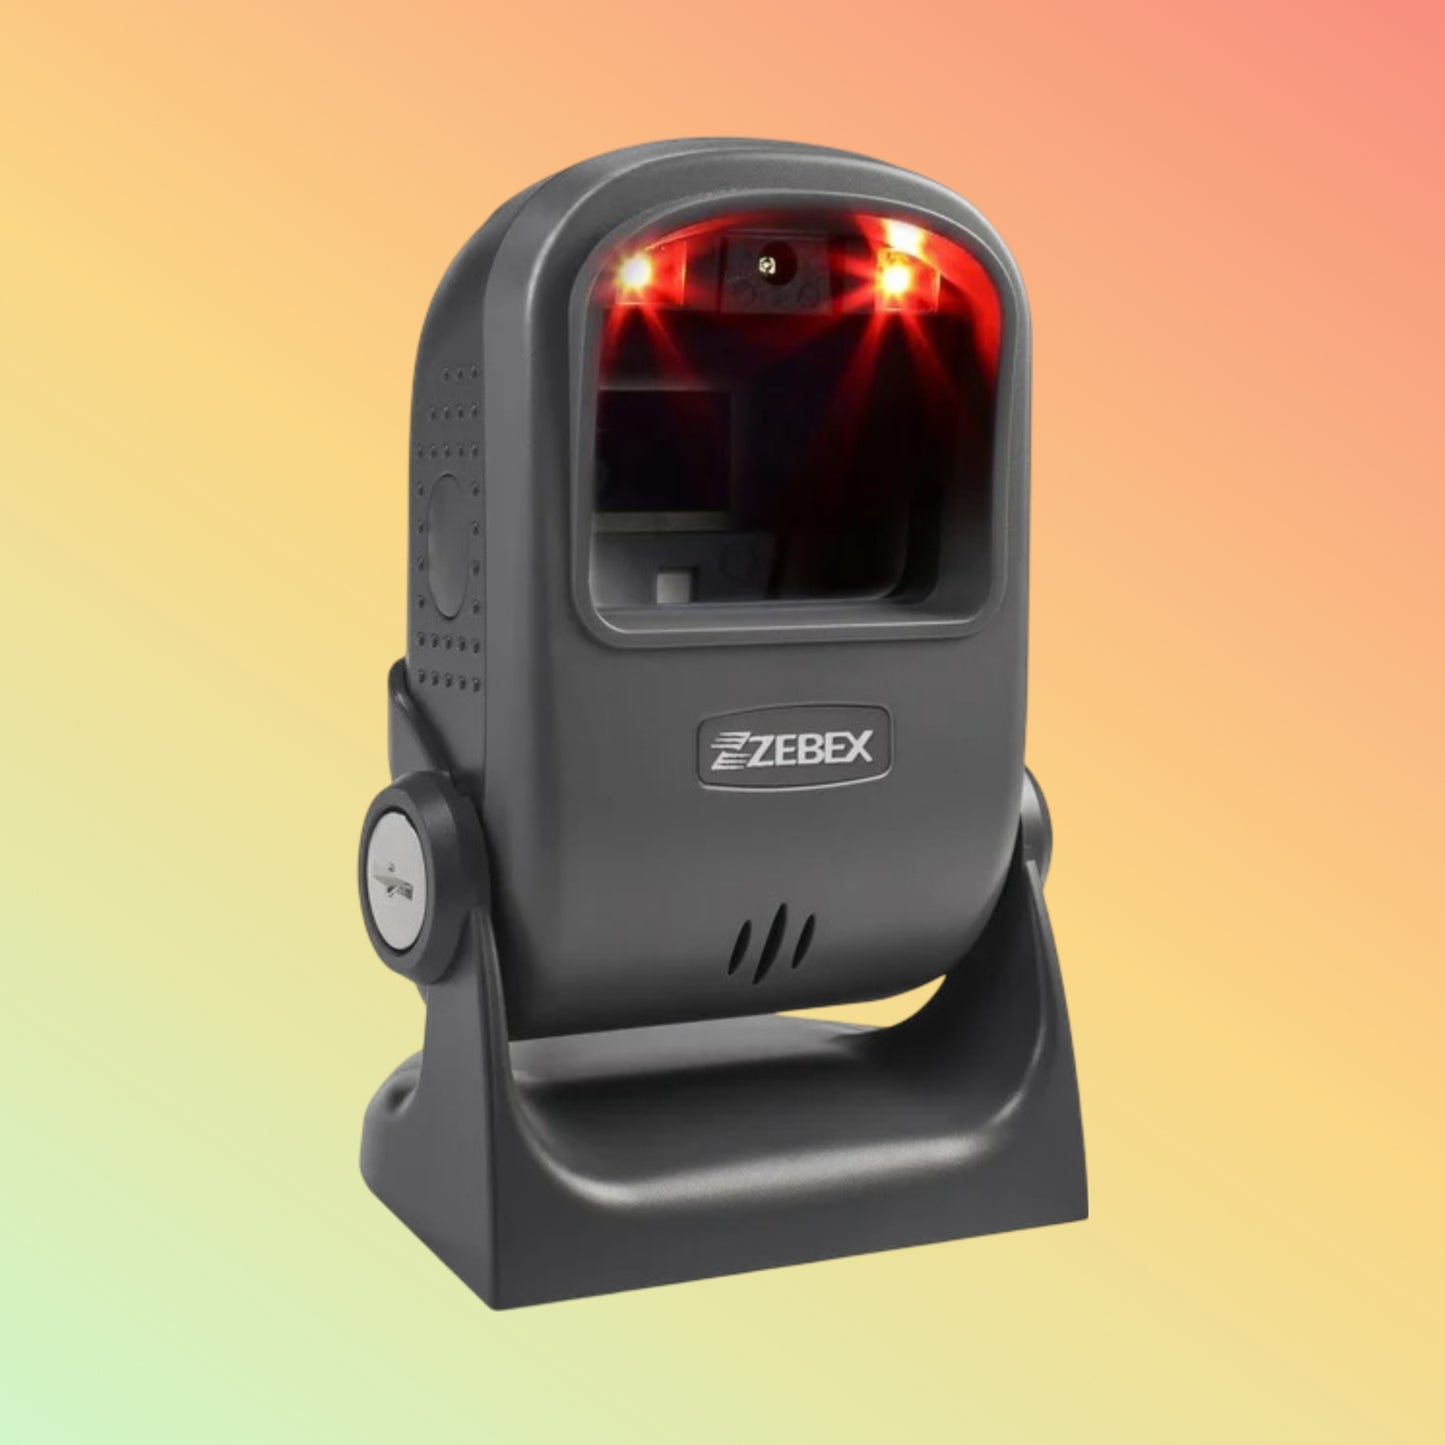 Zebex Z-8072 Ultra 2D Image Hands-Free Scanner